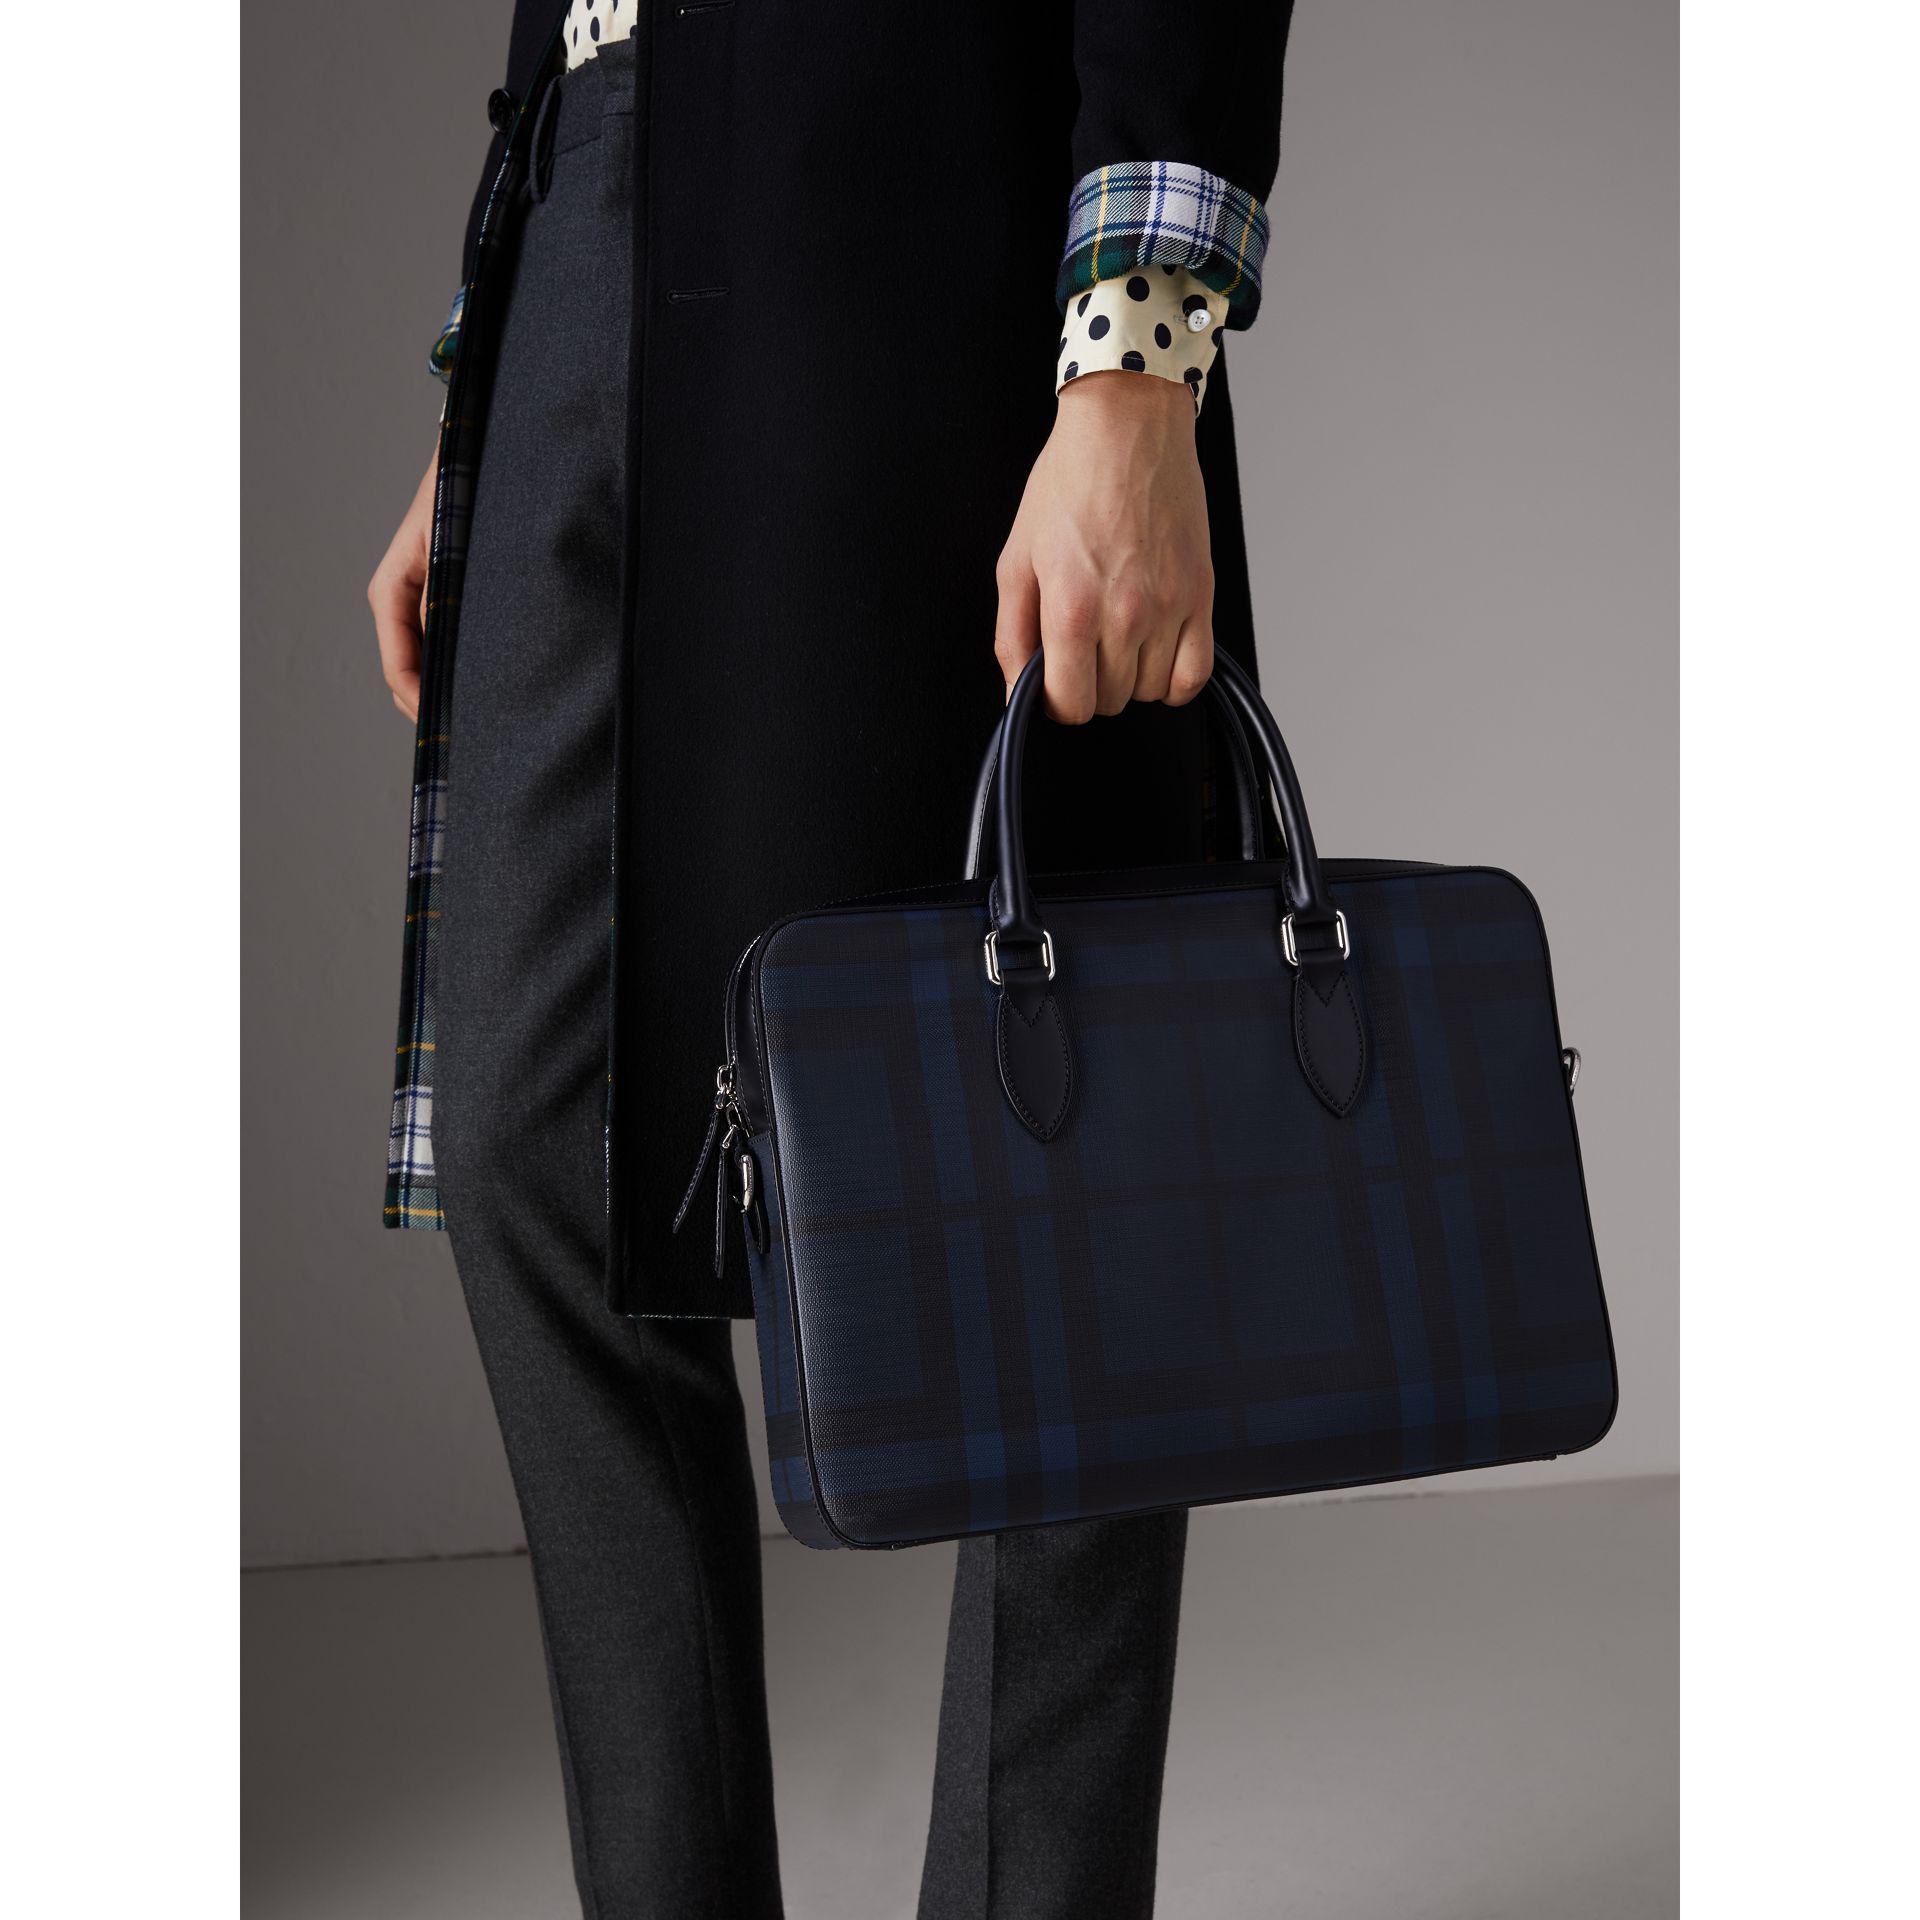 Actualizar 83+ imagen burberry london briefcase